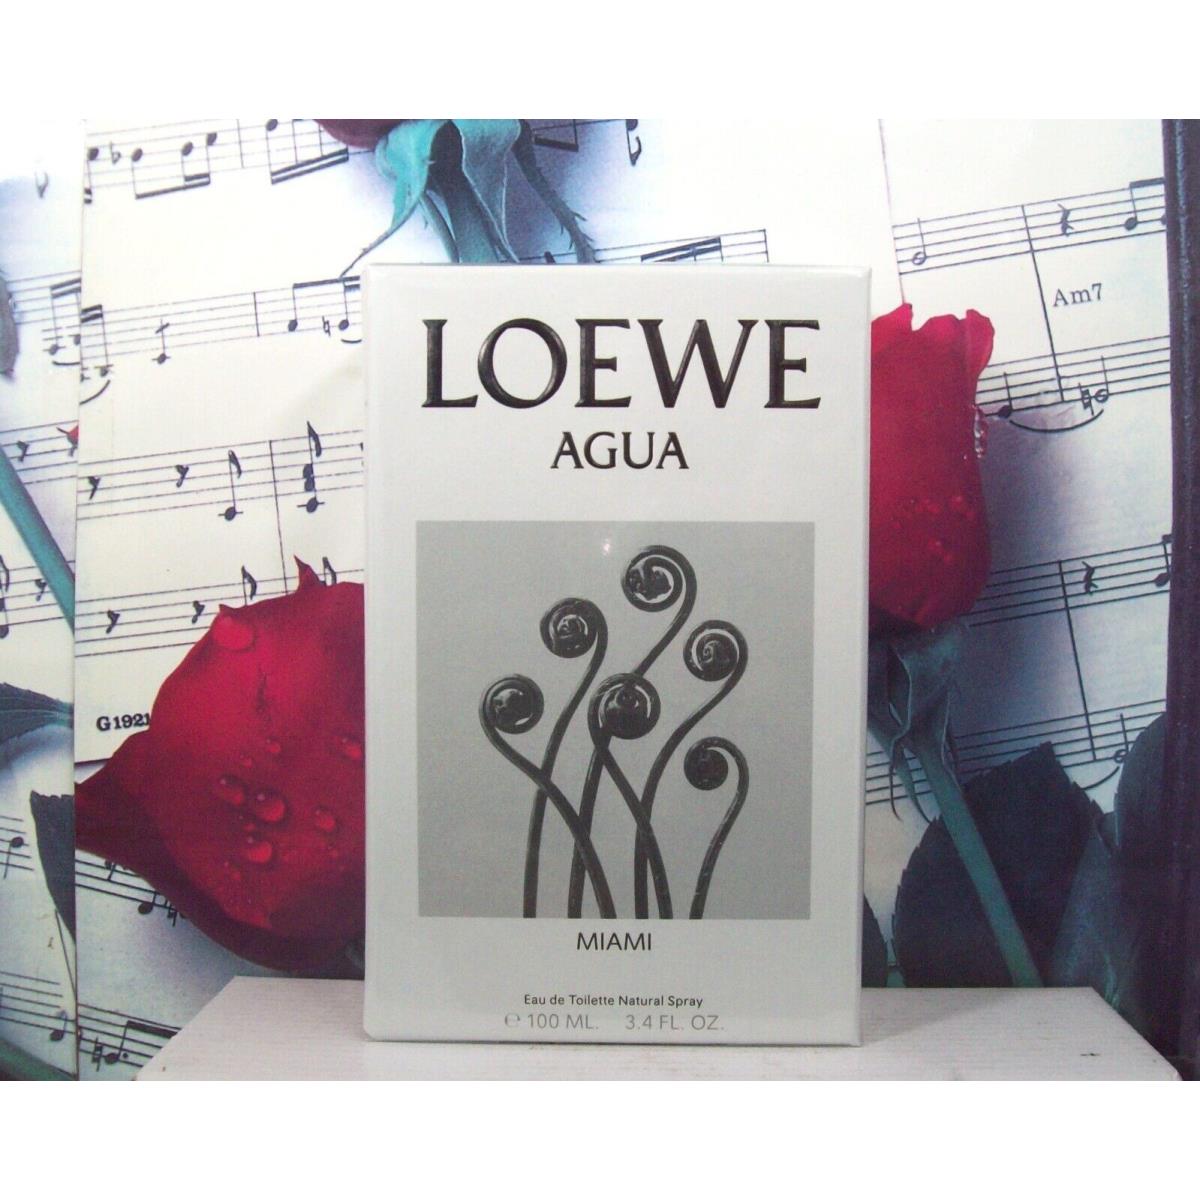 Loewe Agua Miami 3.4 Oz. Edt Spray